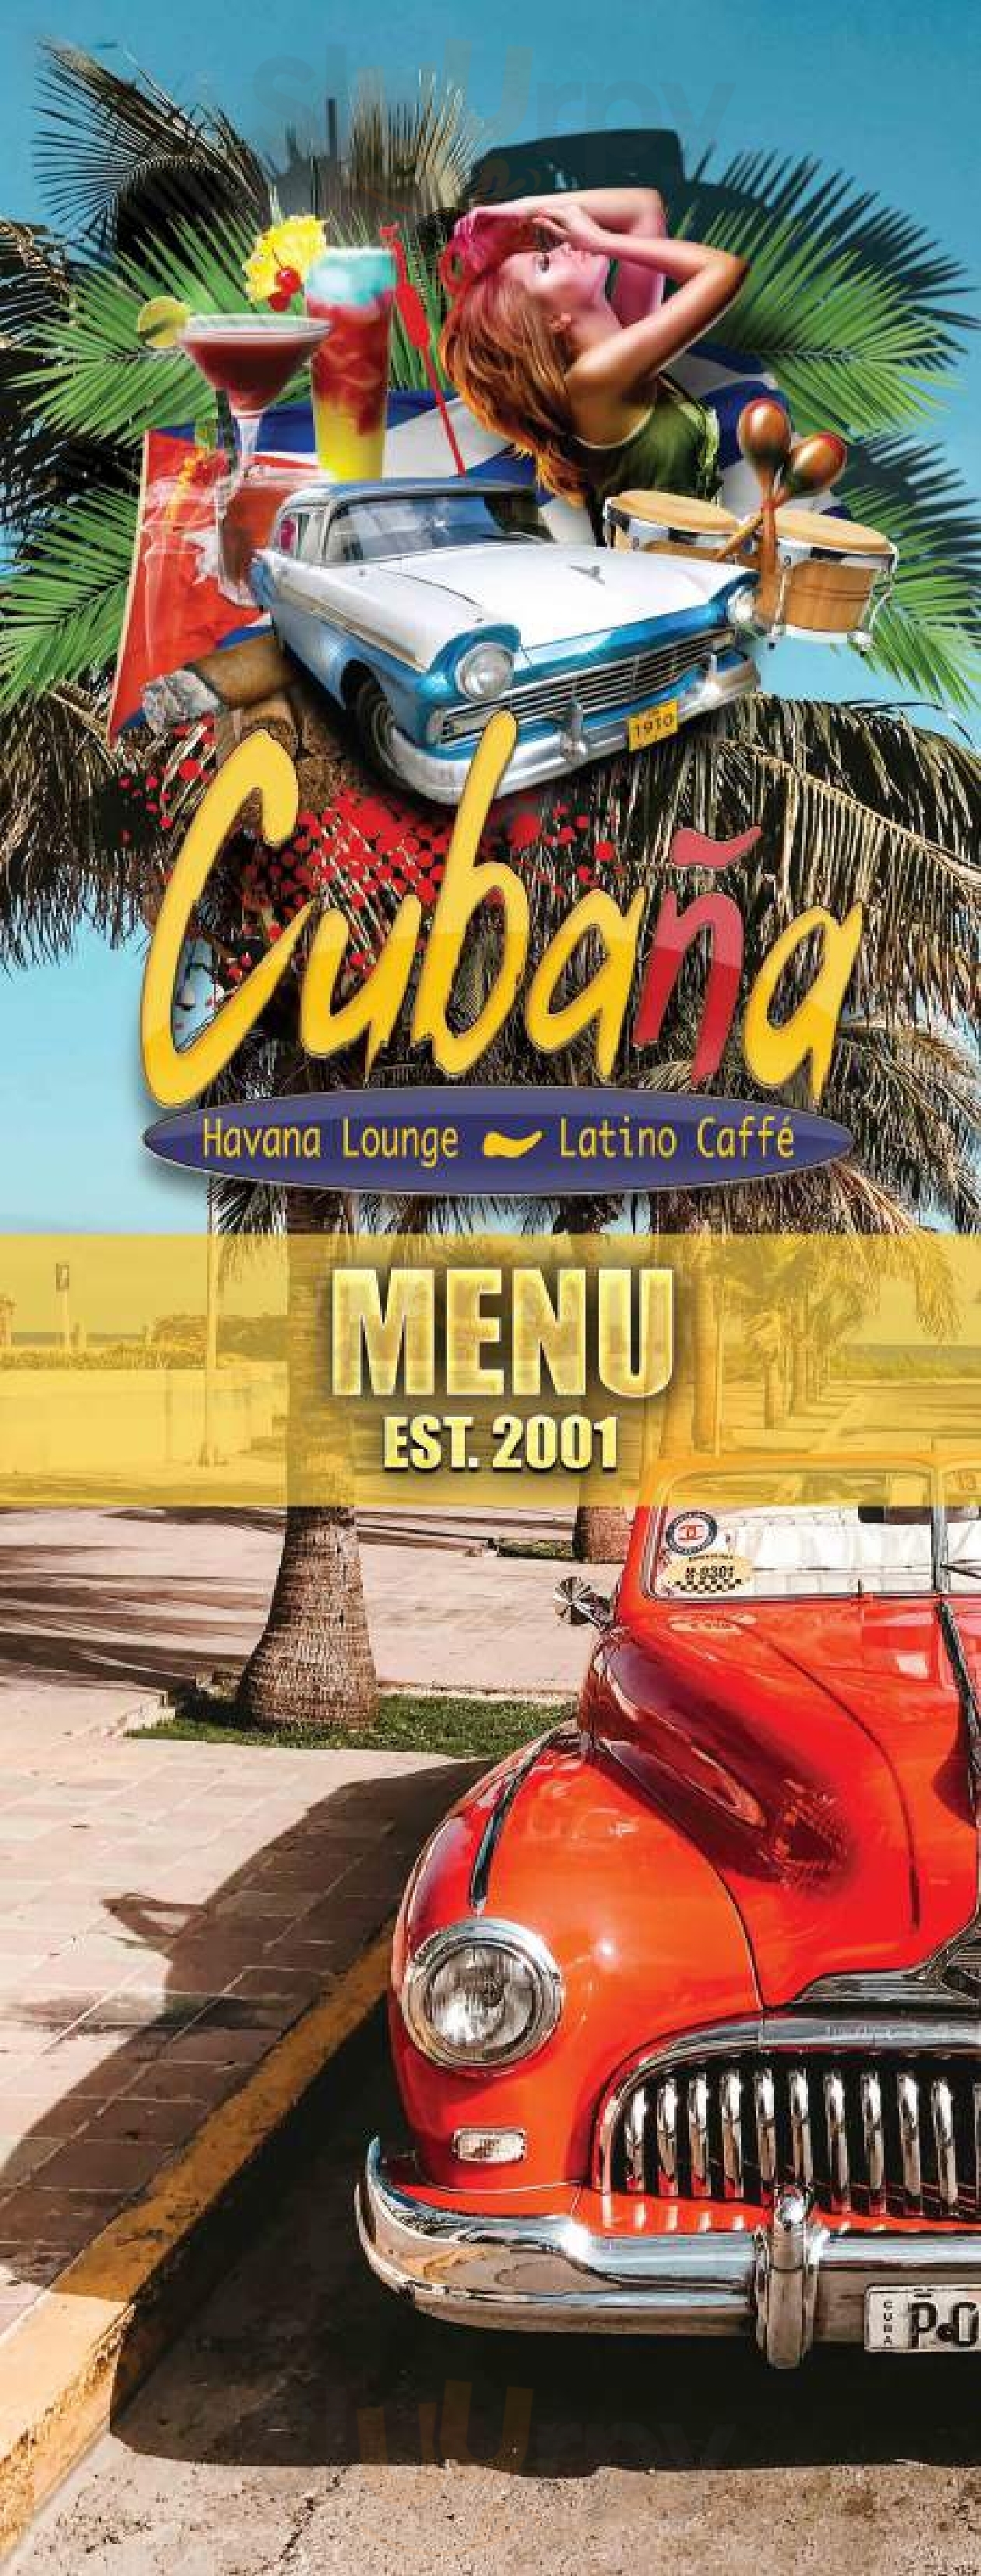 Cubana Havana Lounge & Latino Caffe Richards Bay Menu - 1